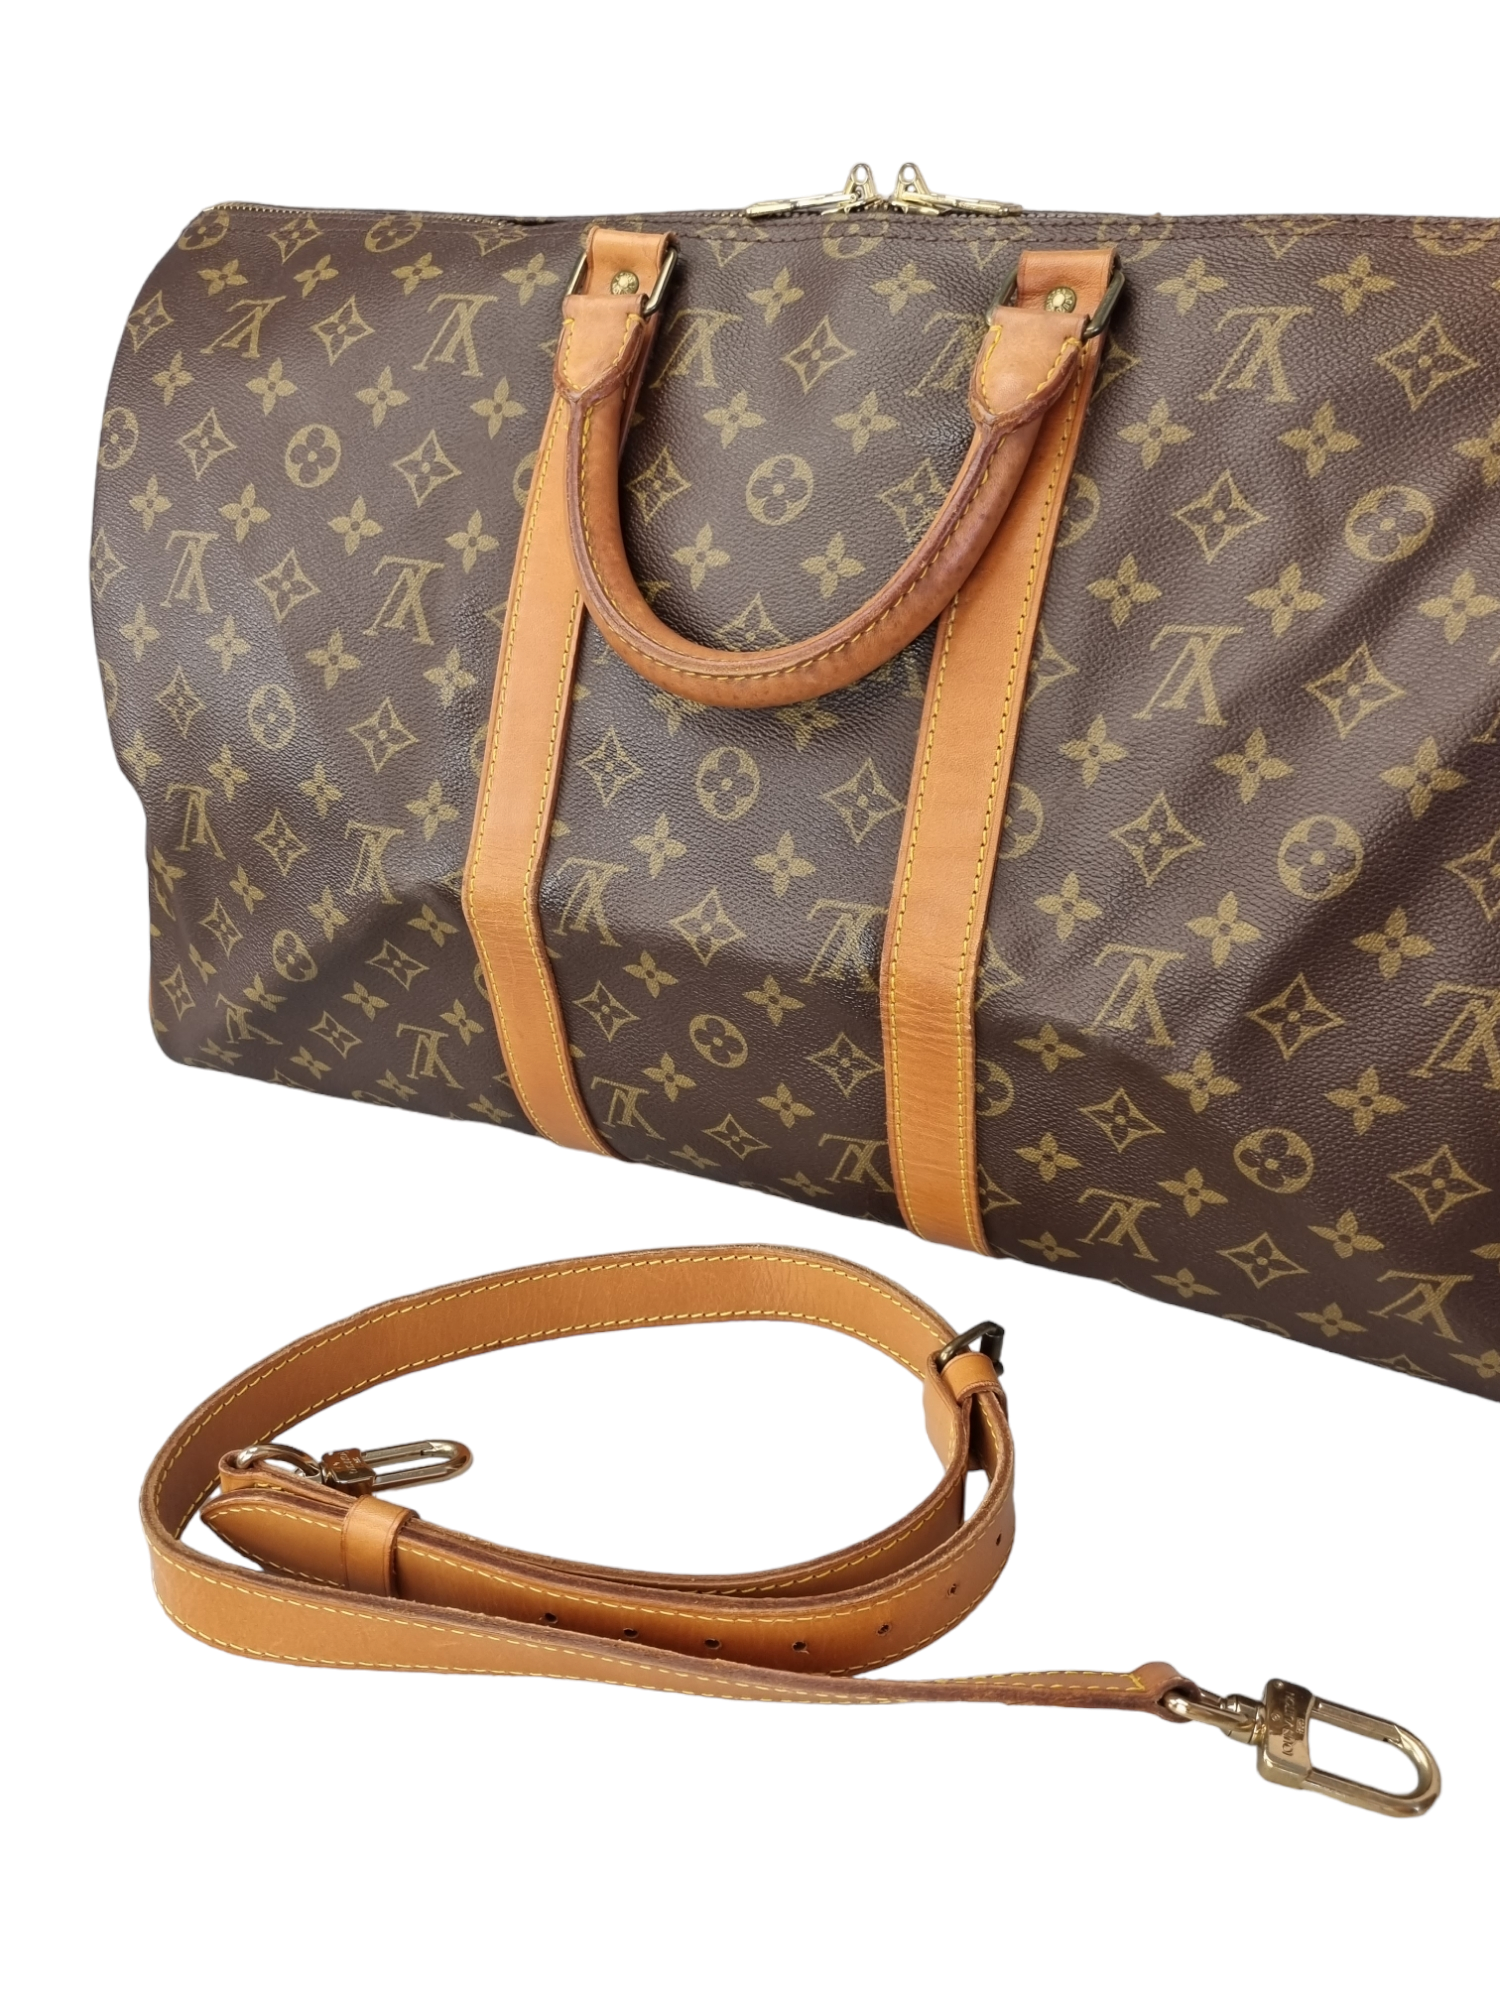 Louis Vuitton KeepallBandouliere 50 Bostonbag